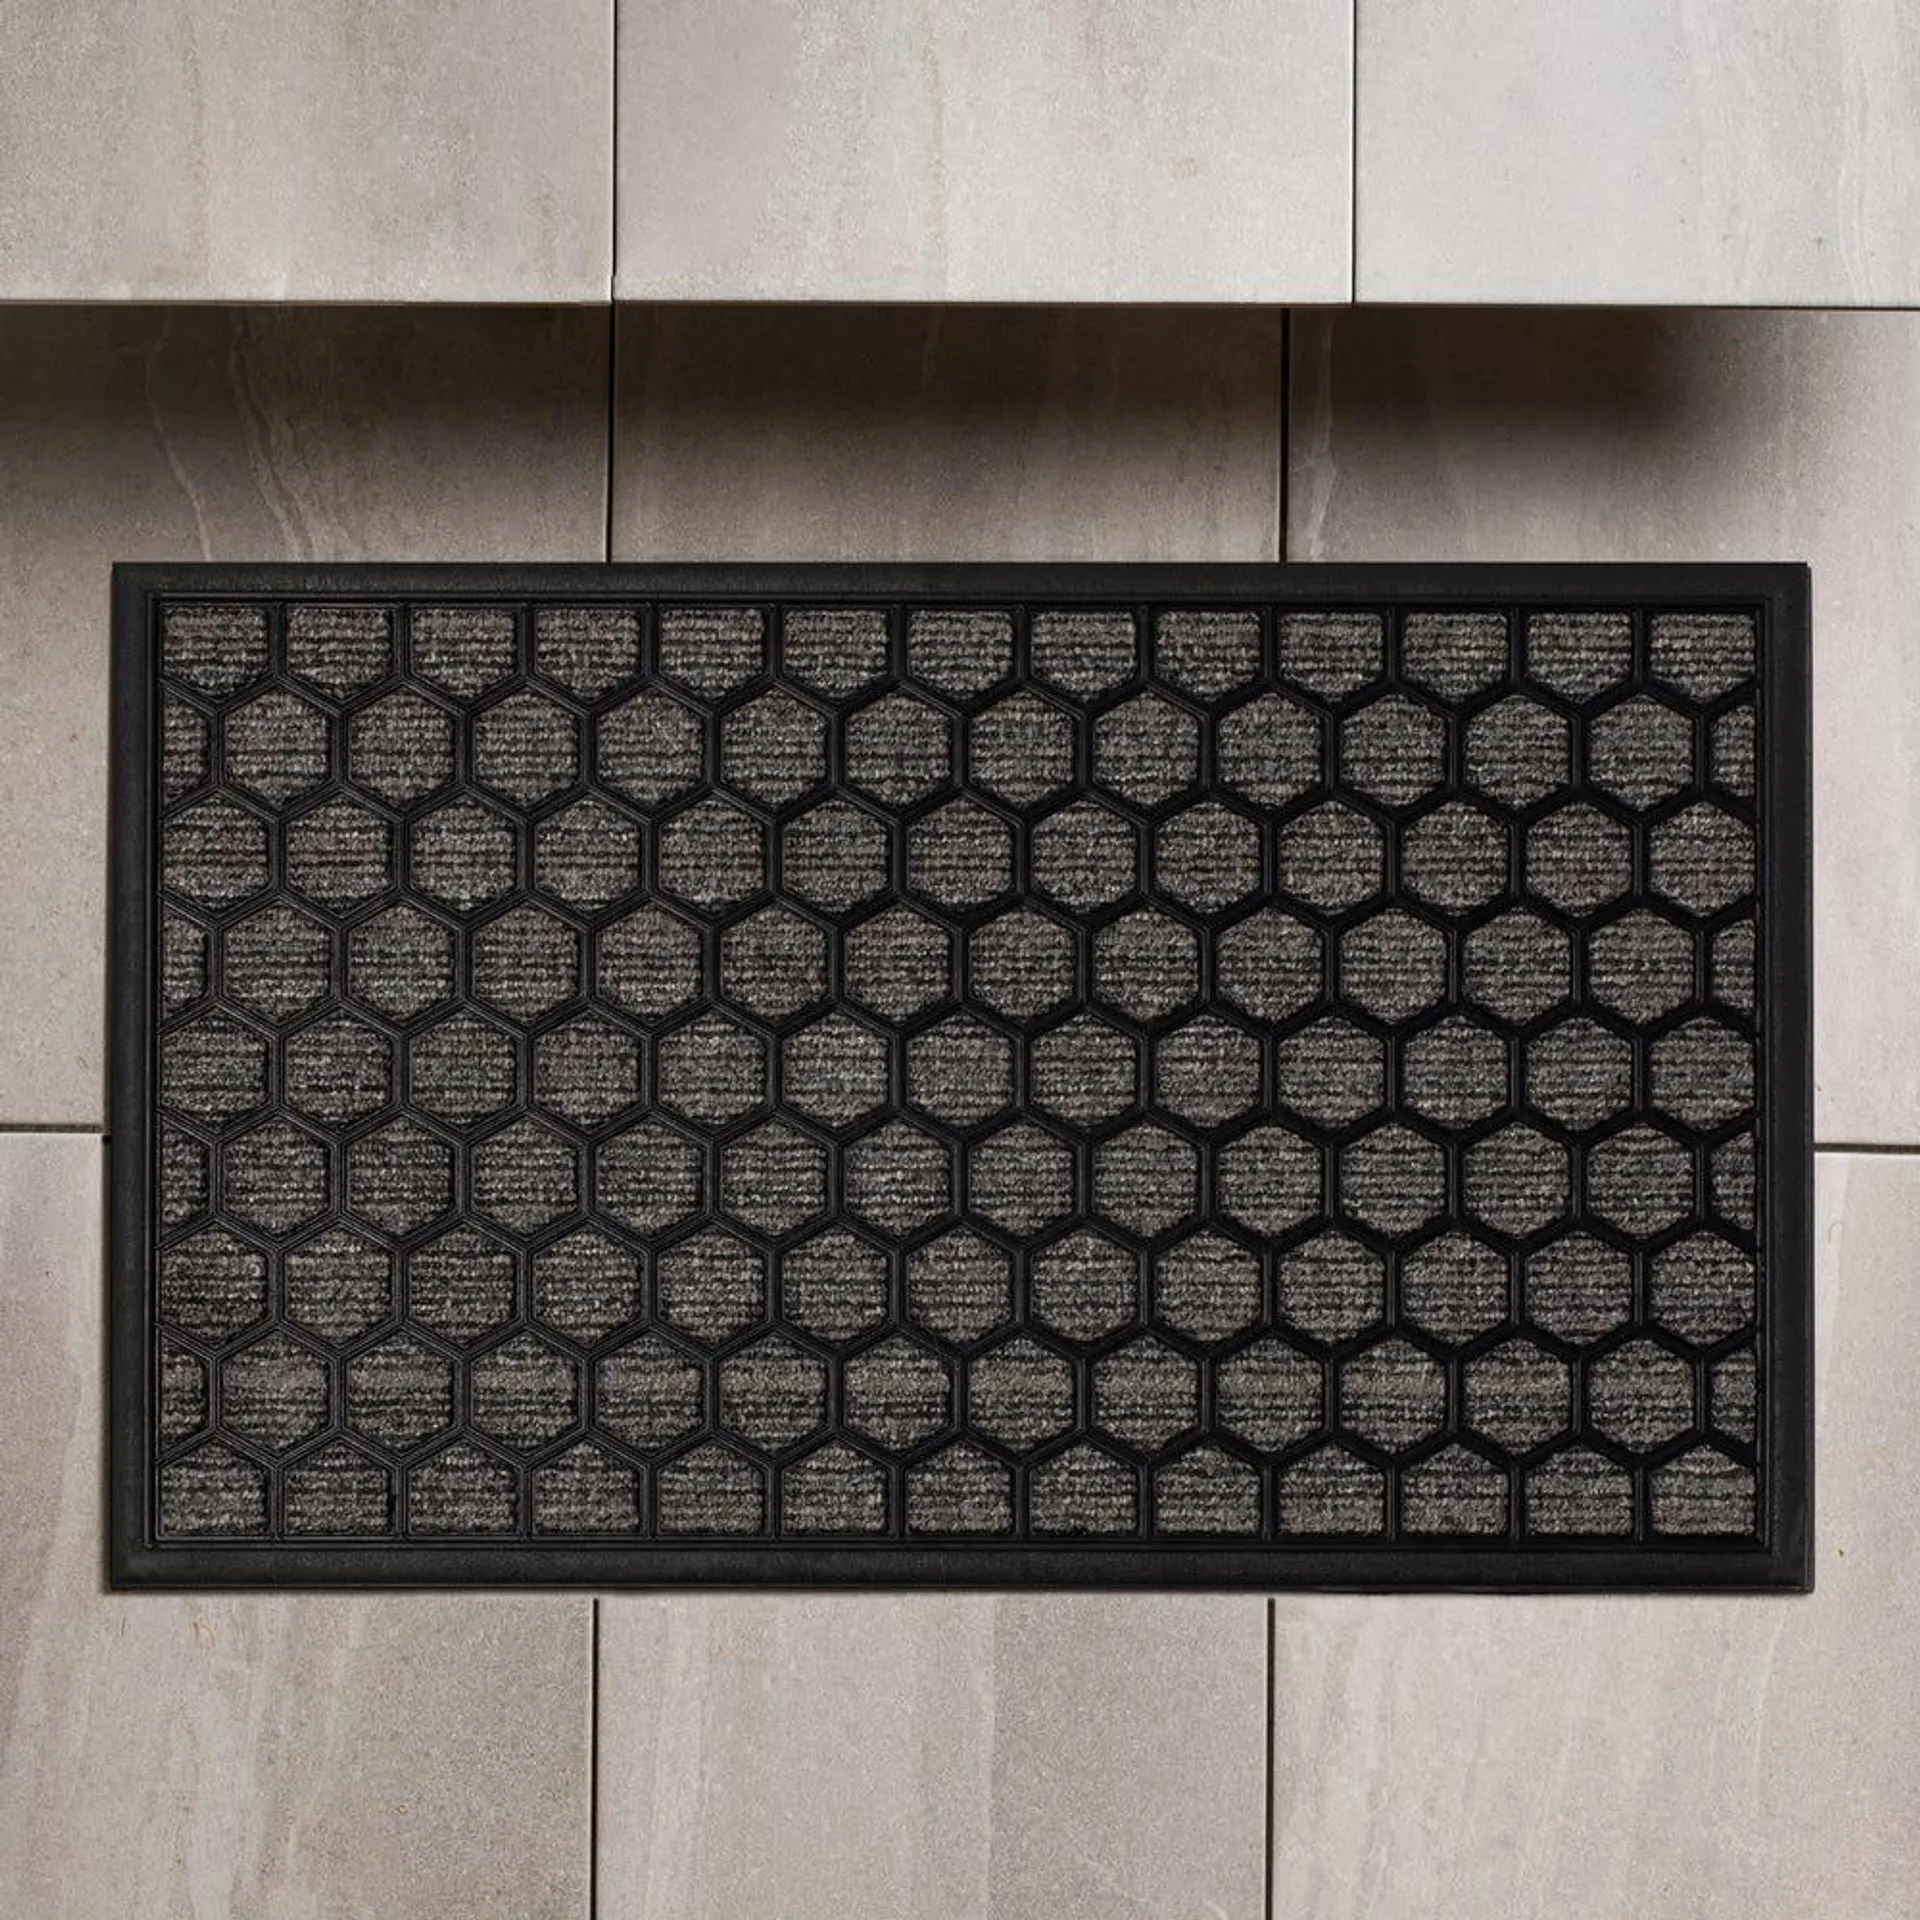 KSP Tufted 'Ogee' Rubber Backed Doormat (Grey)